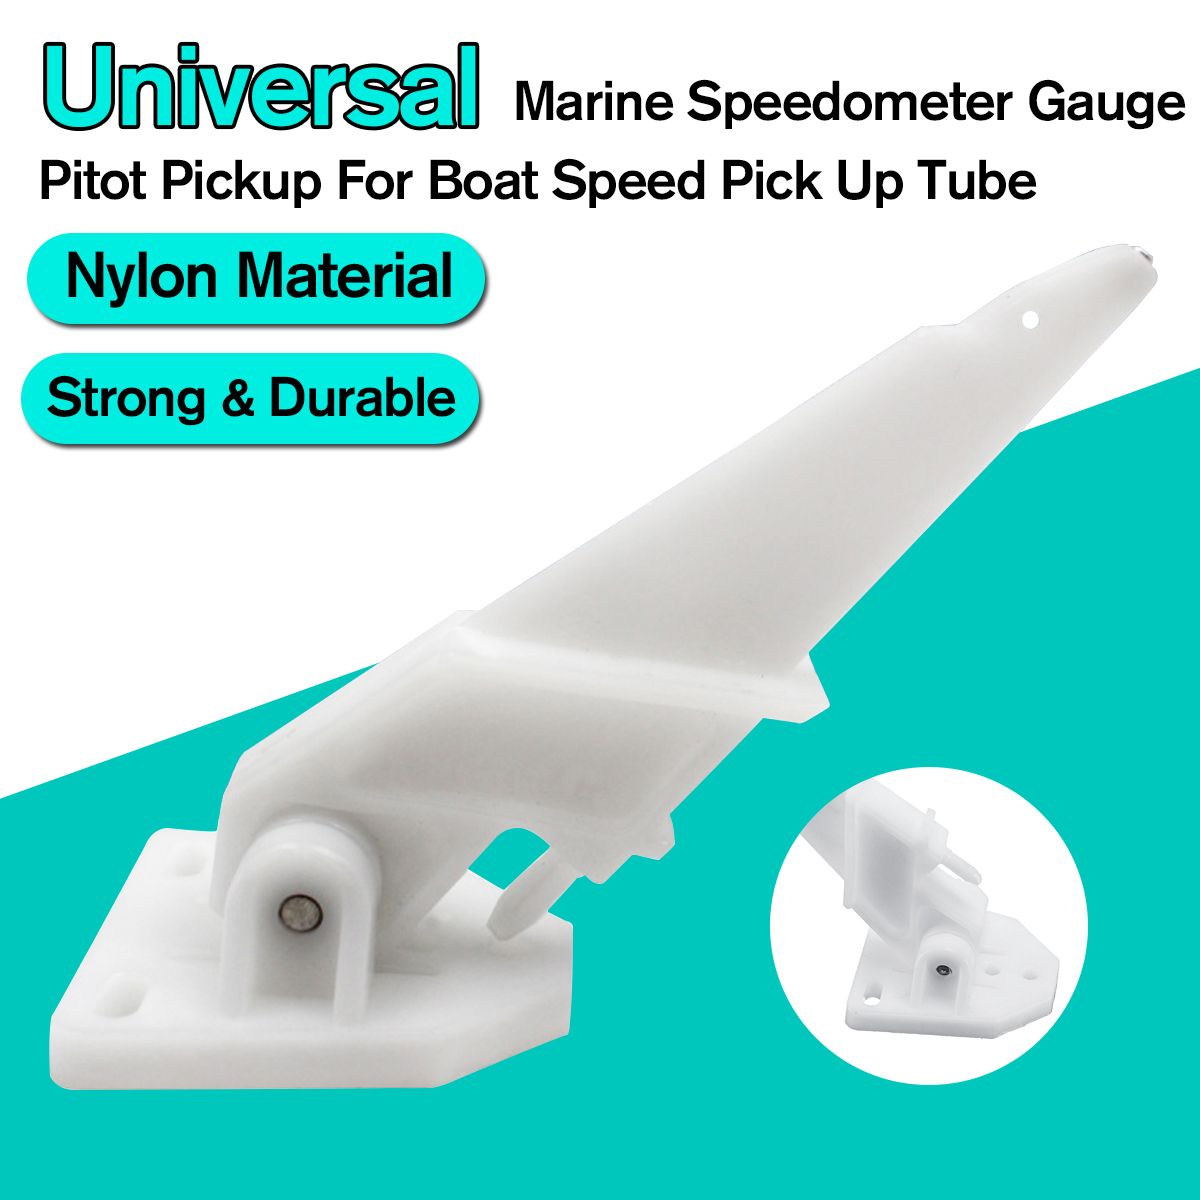 Universal-Speedometer-Gauge-Pitot-Pickup-For-Boat-Speed-Pick-Up-Tube-1501411